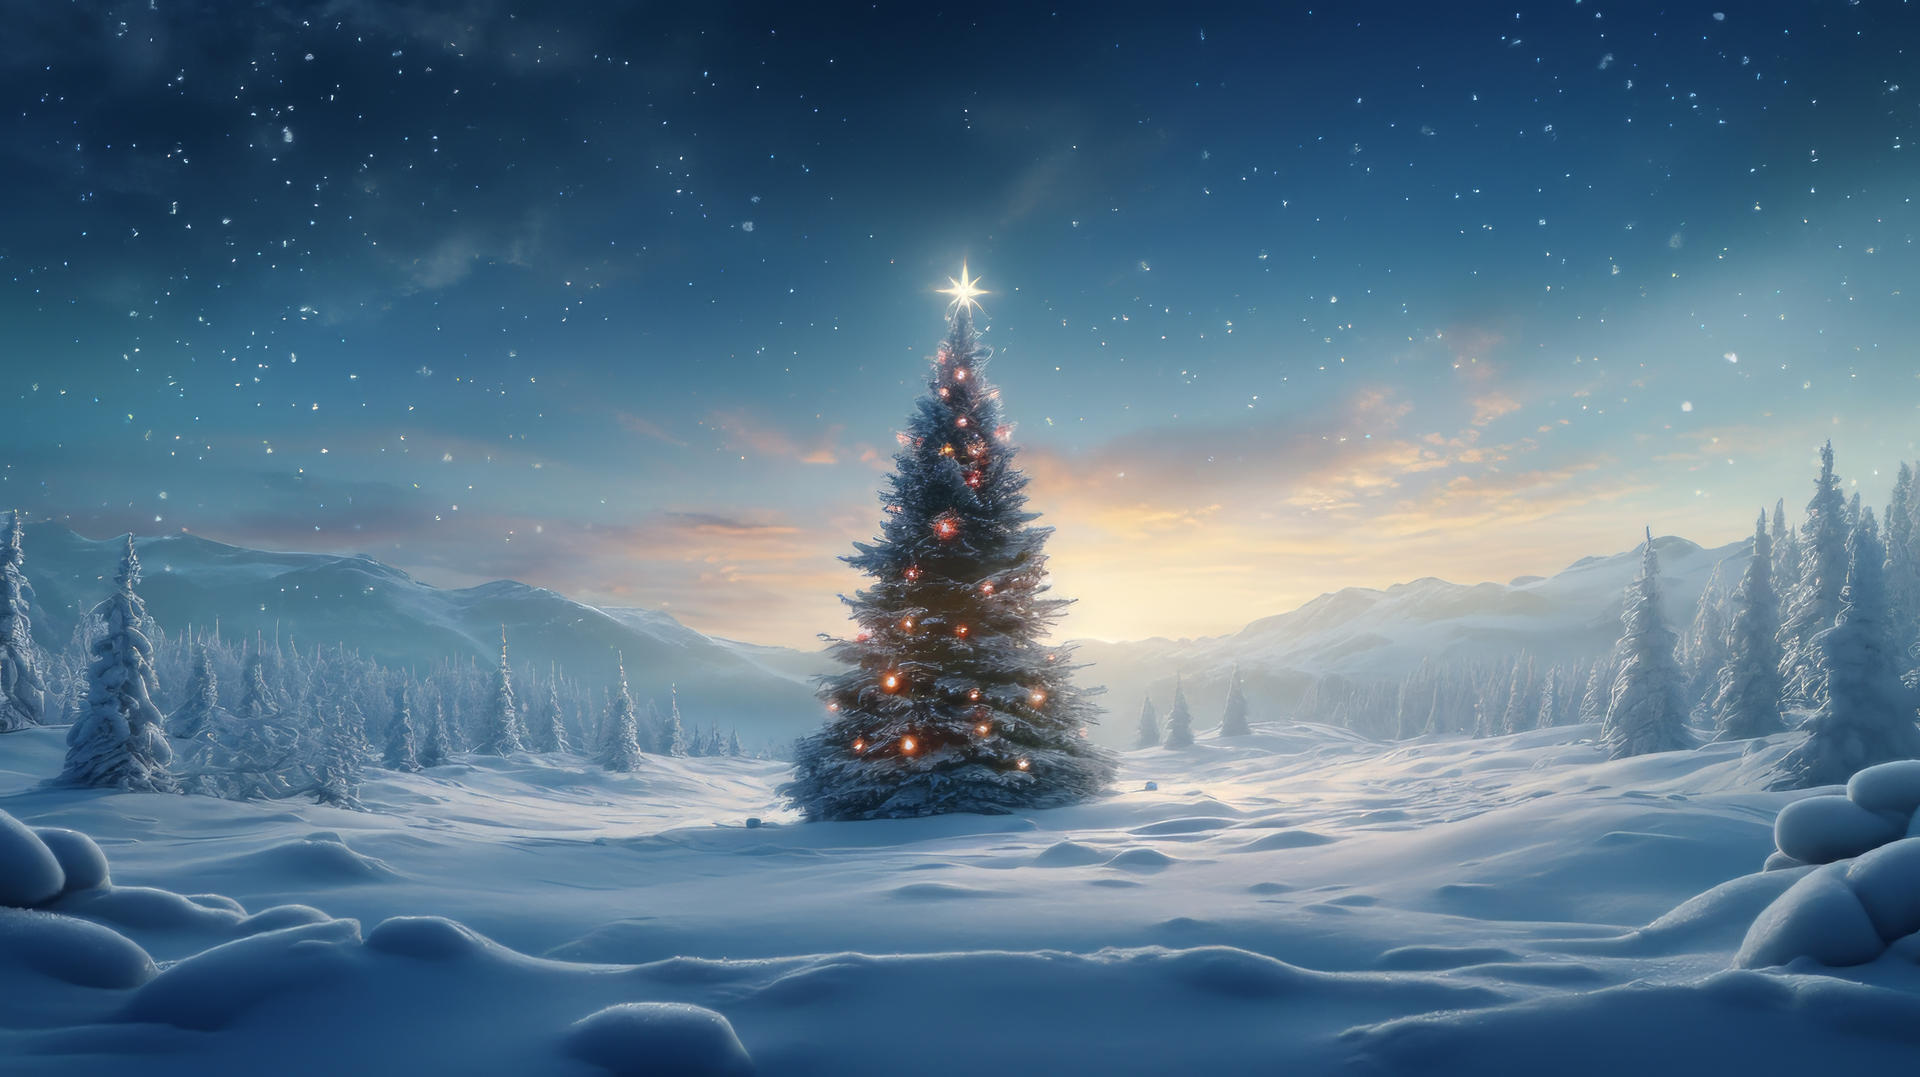 The Christmas tree by V1Ruben on DeviantArt